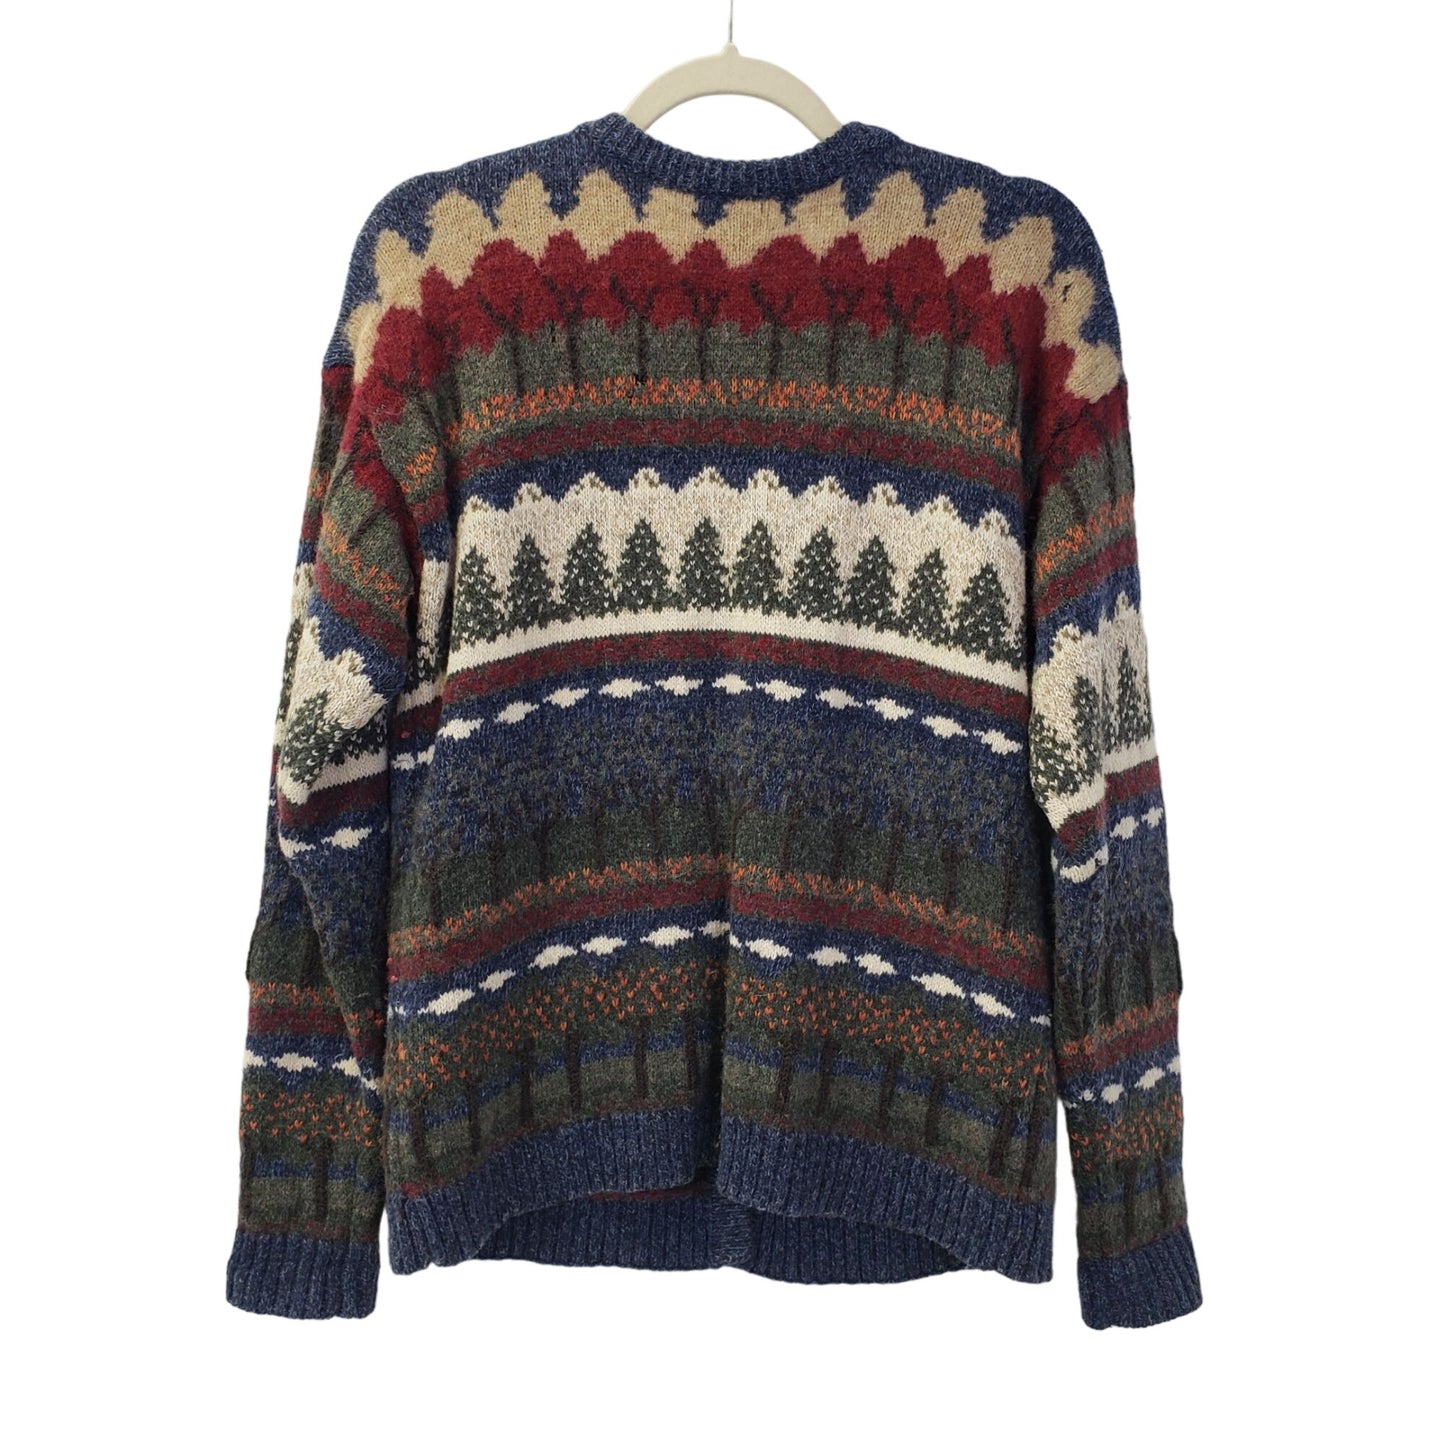 Northern Reflections Wool Blend Cardigan Sweater Size Medium